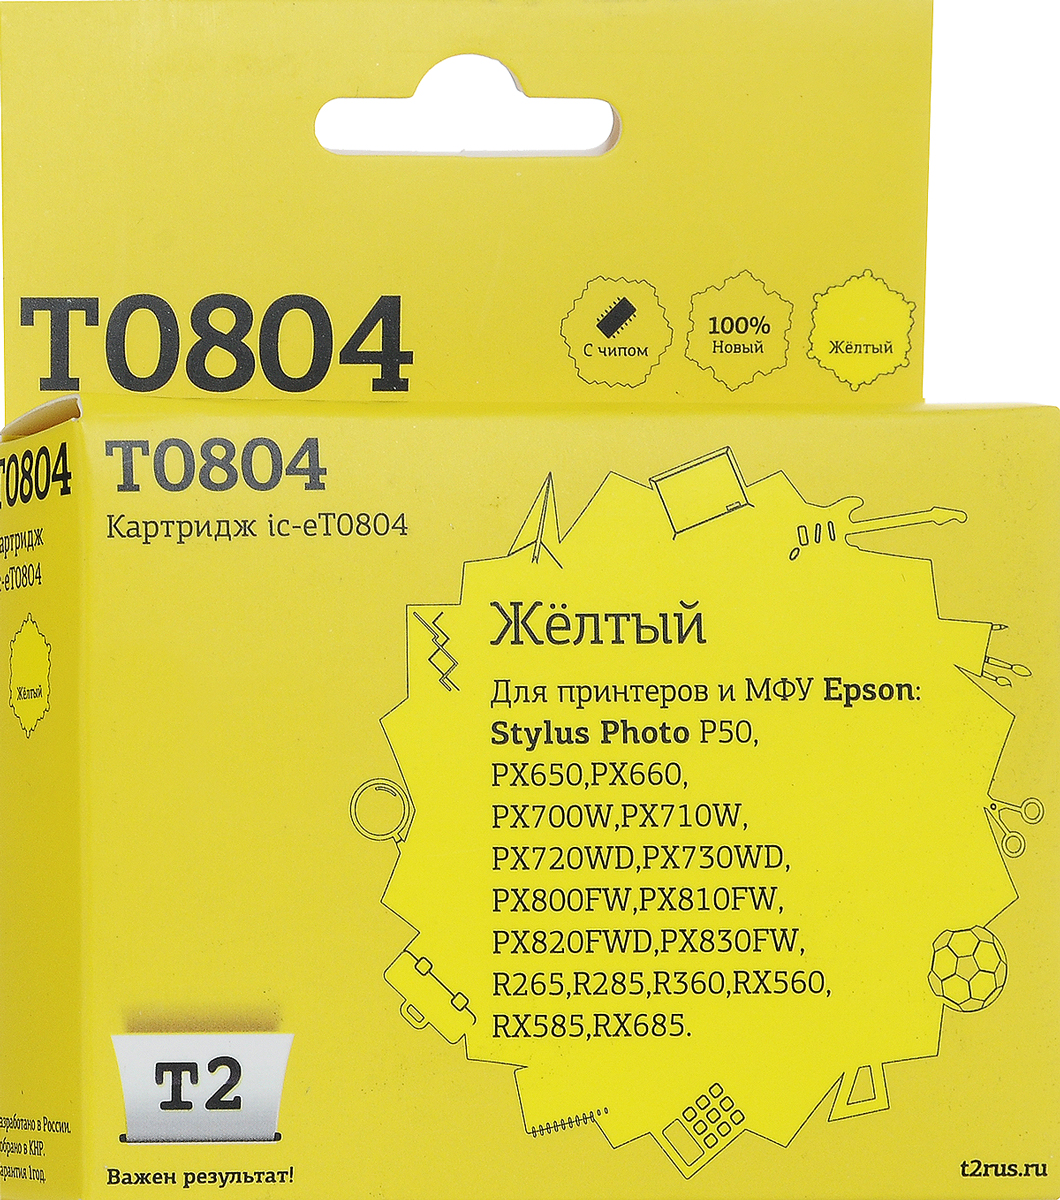 T2 IC-ET0804 (аналог T08044010), Yellow картридж для Epson Stylus Photo P50/PX660/PX720WD/PX820FWD